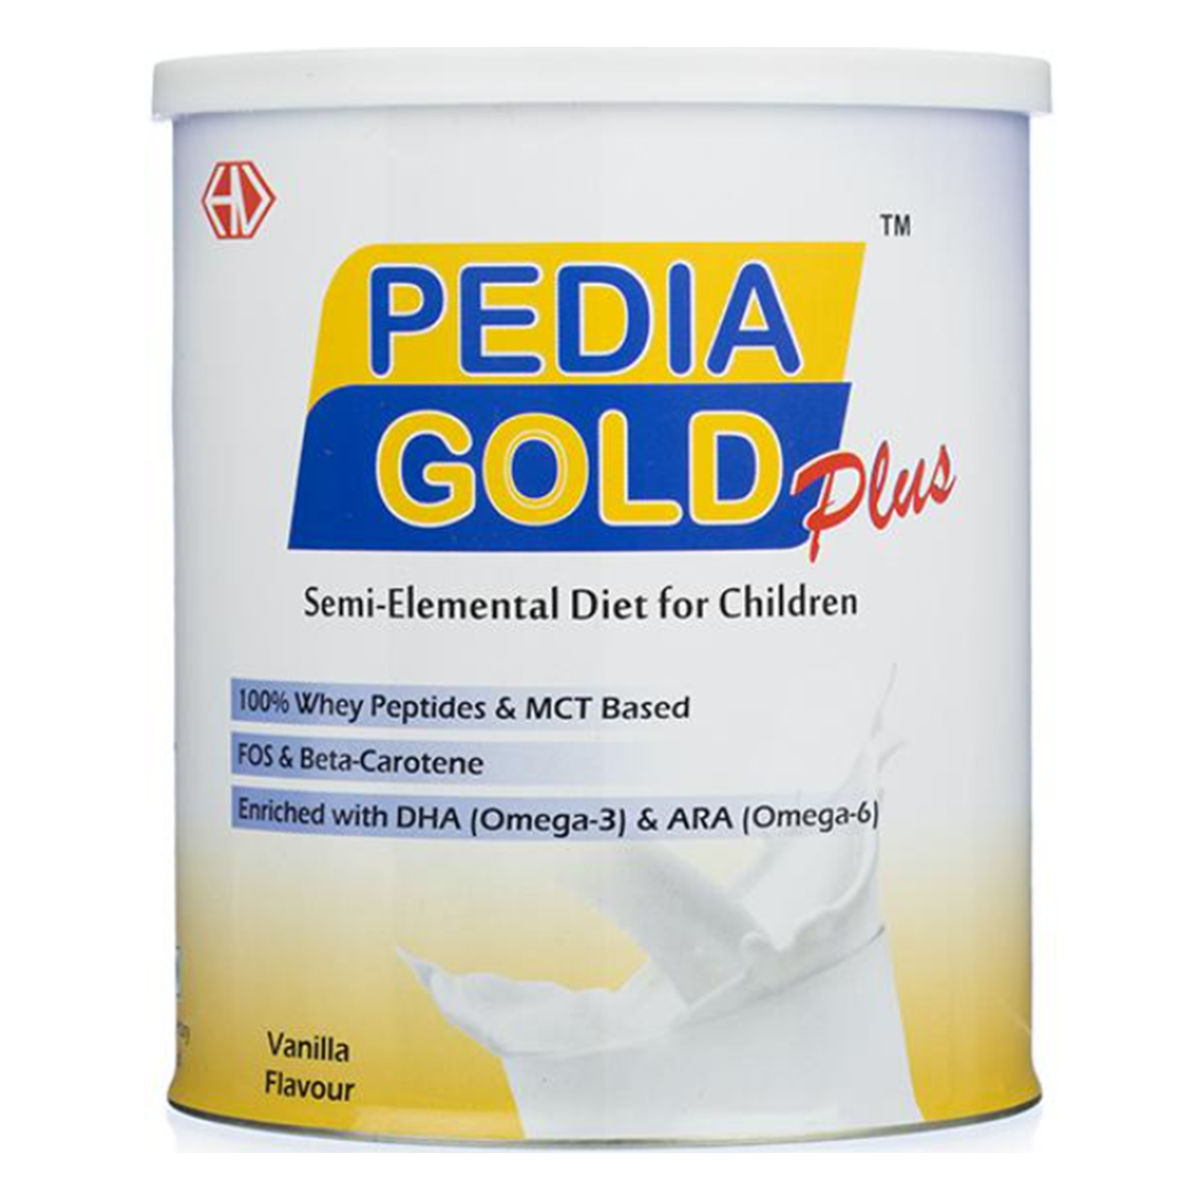 Buy Pedia Gold Plus Vanilla Flavour Powder, 400 gm Online